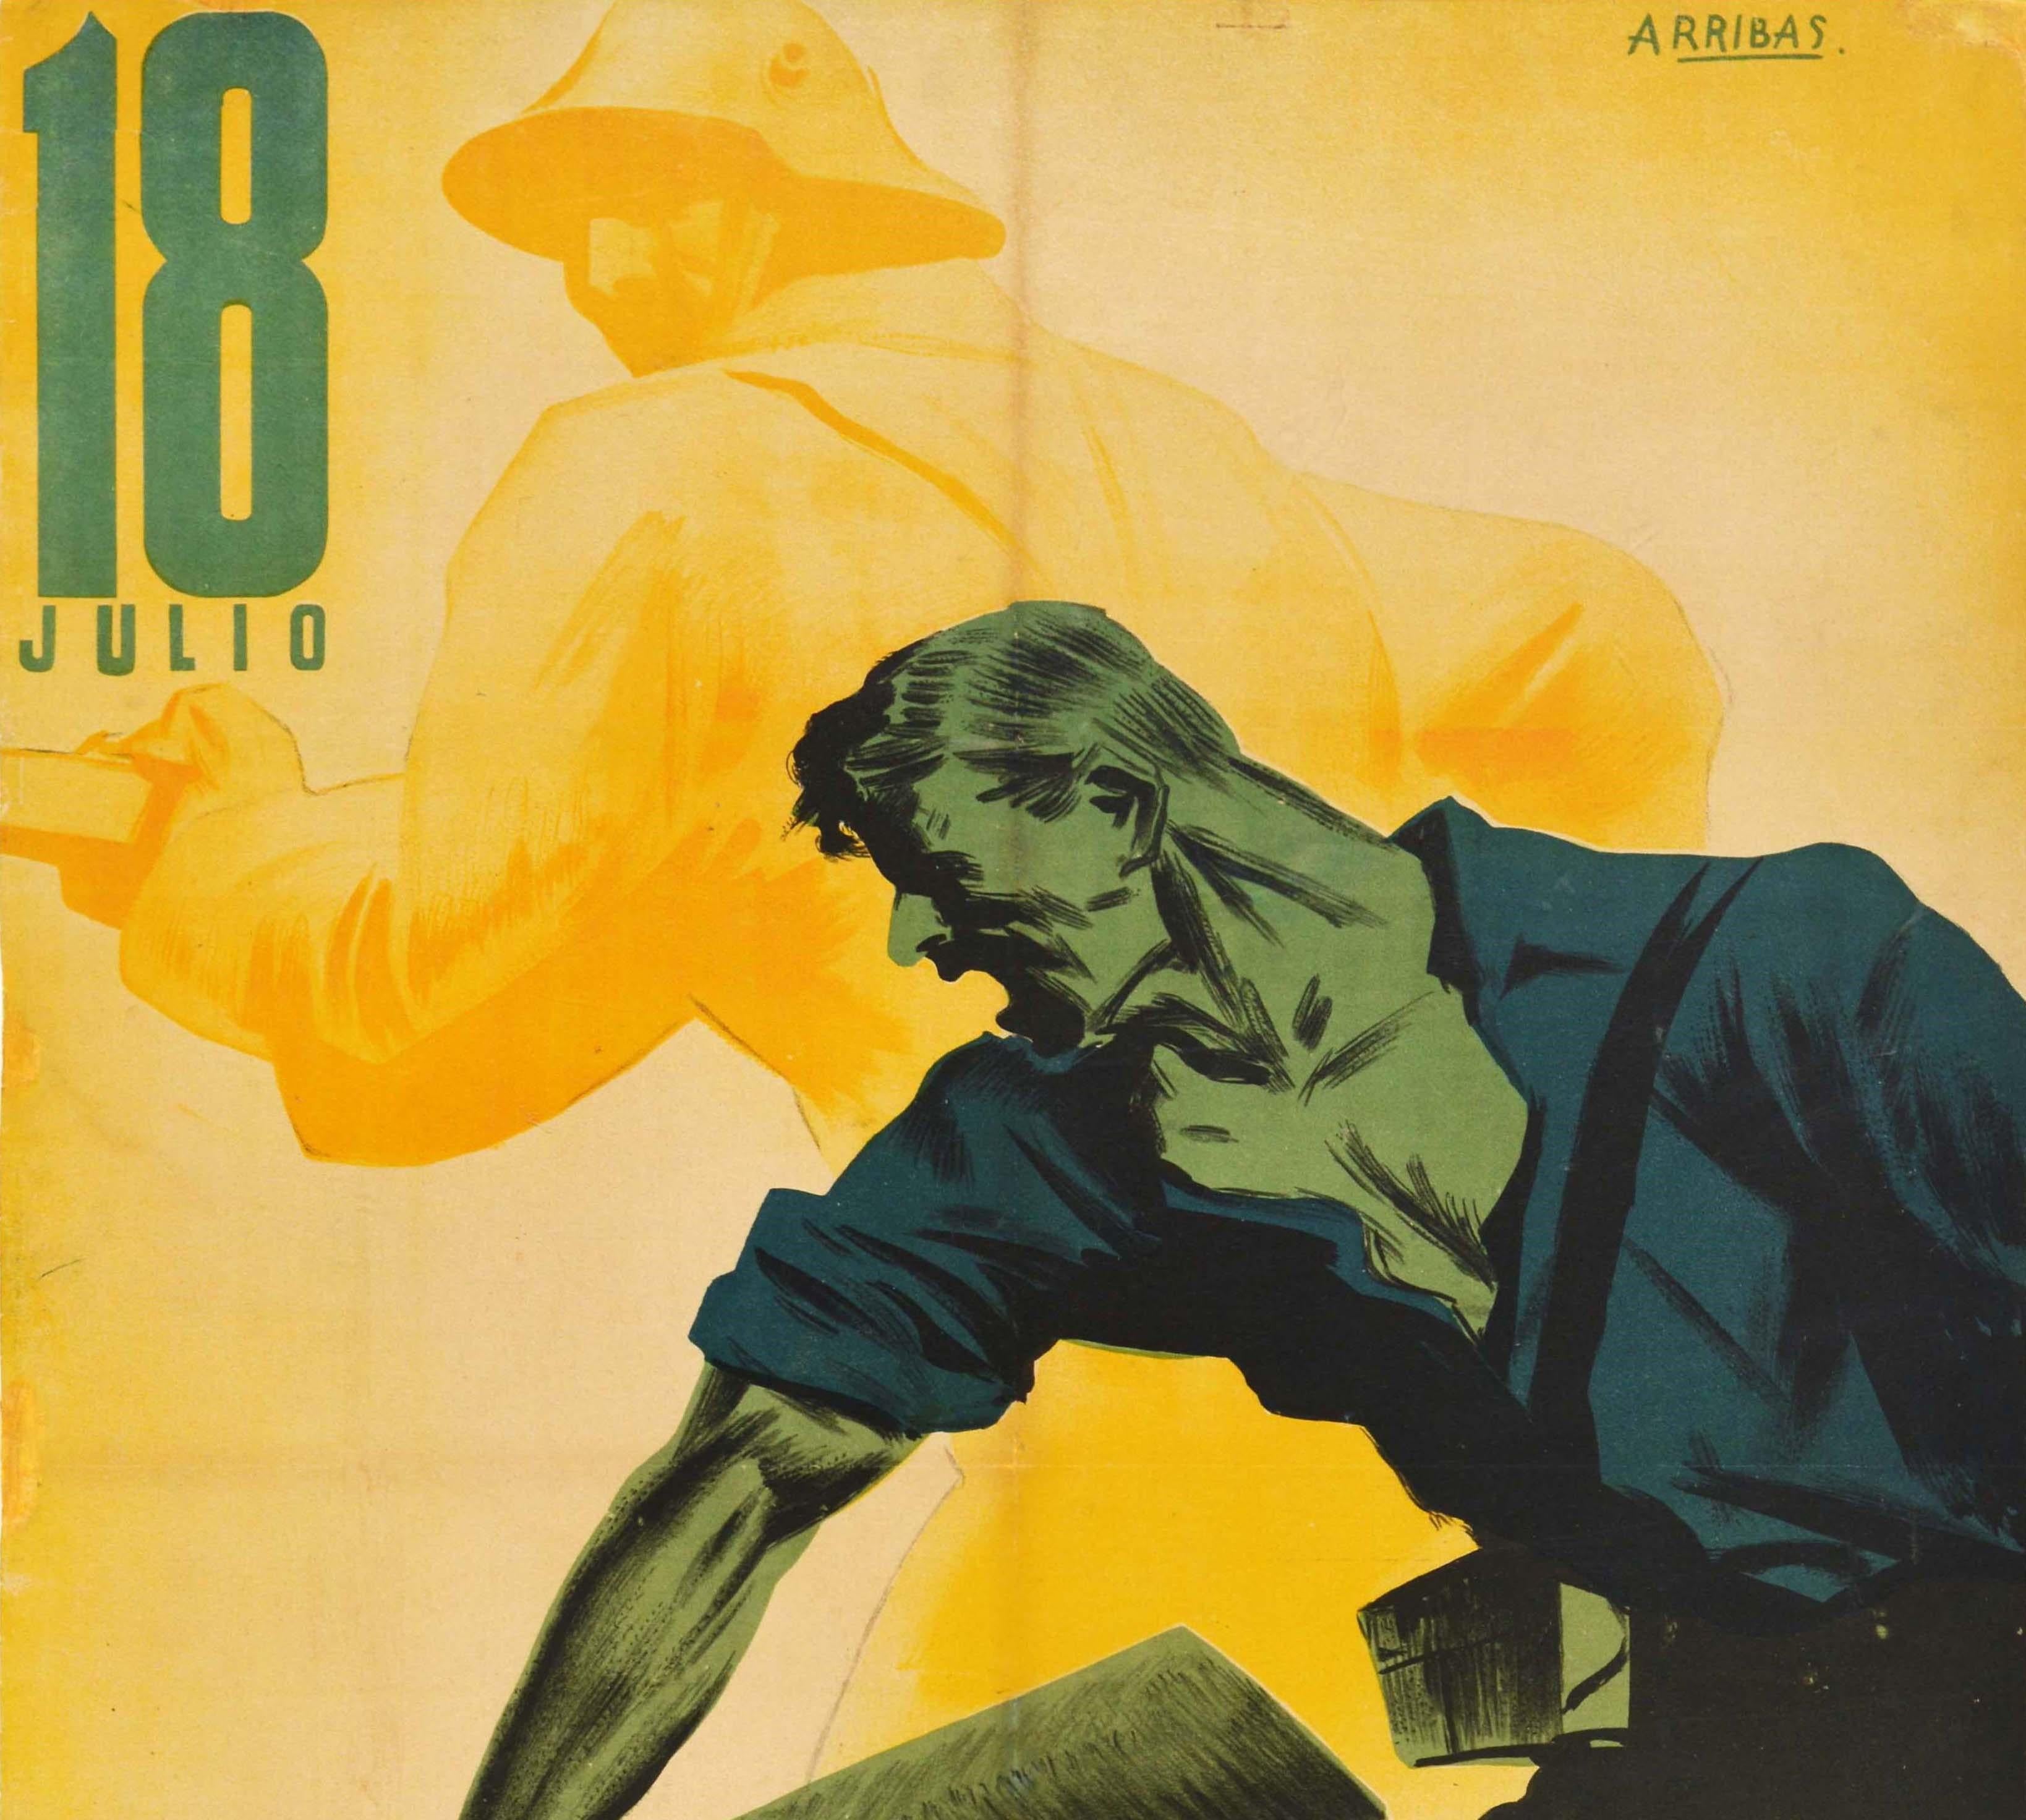 Original Vintage Spanish Civil War Poster July 18 Julio 1936 1937 Anniversary - Print by Arribas